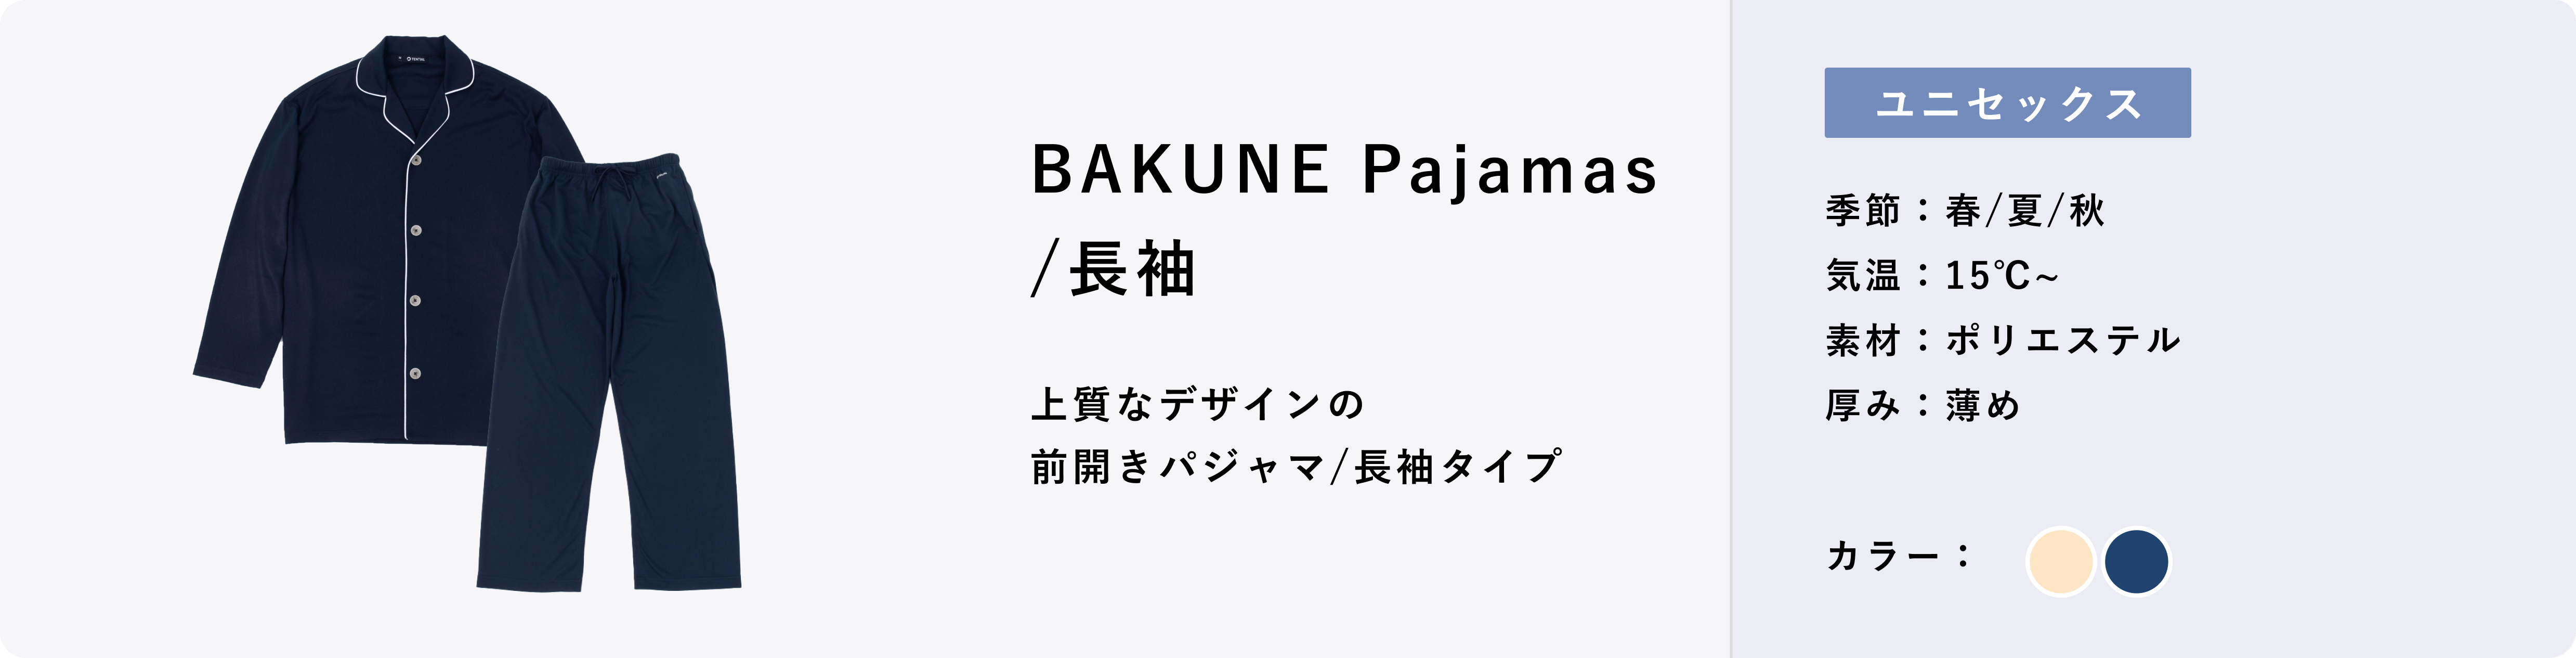 BAKUNEシリーズラインナップ | TENTIAL[テンシャル] 公式オンラインストア